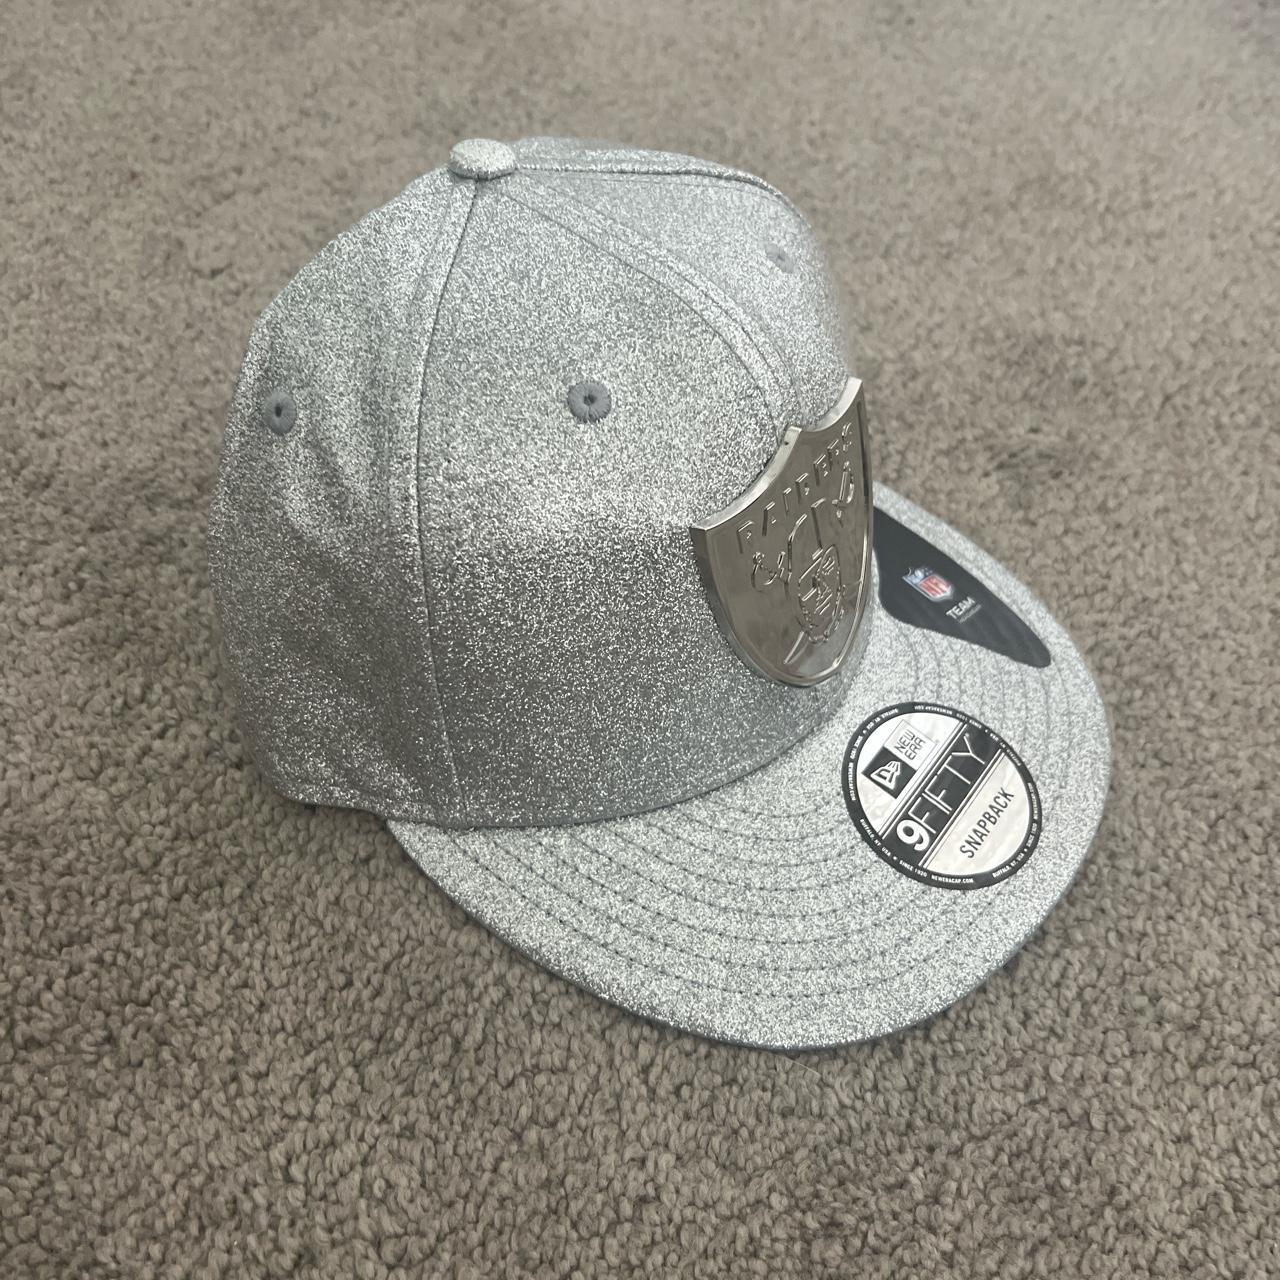 New Era Men's Hat - Silver